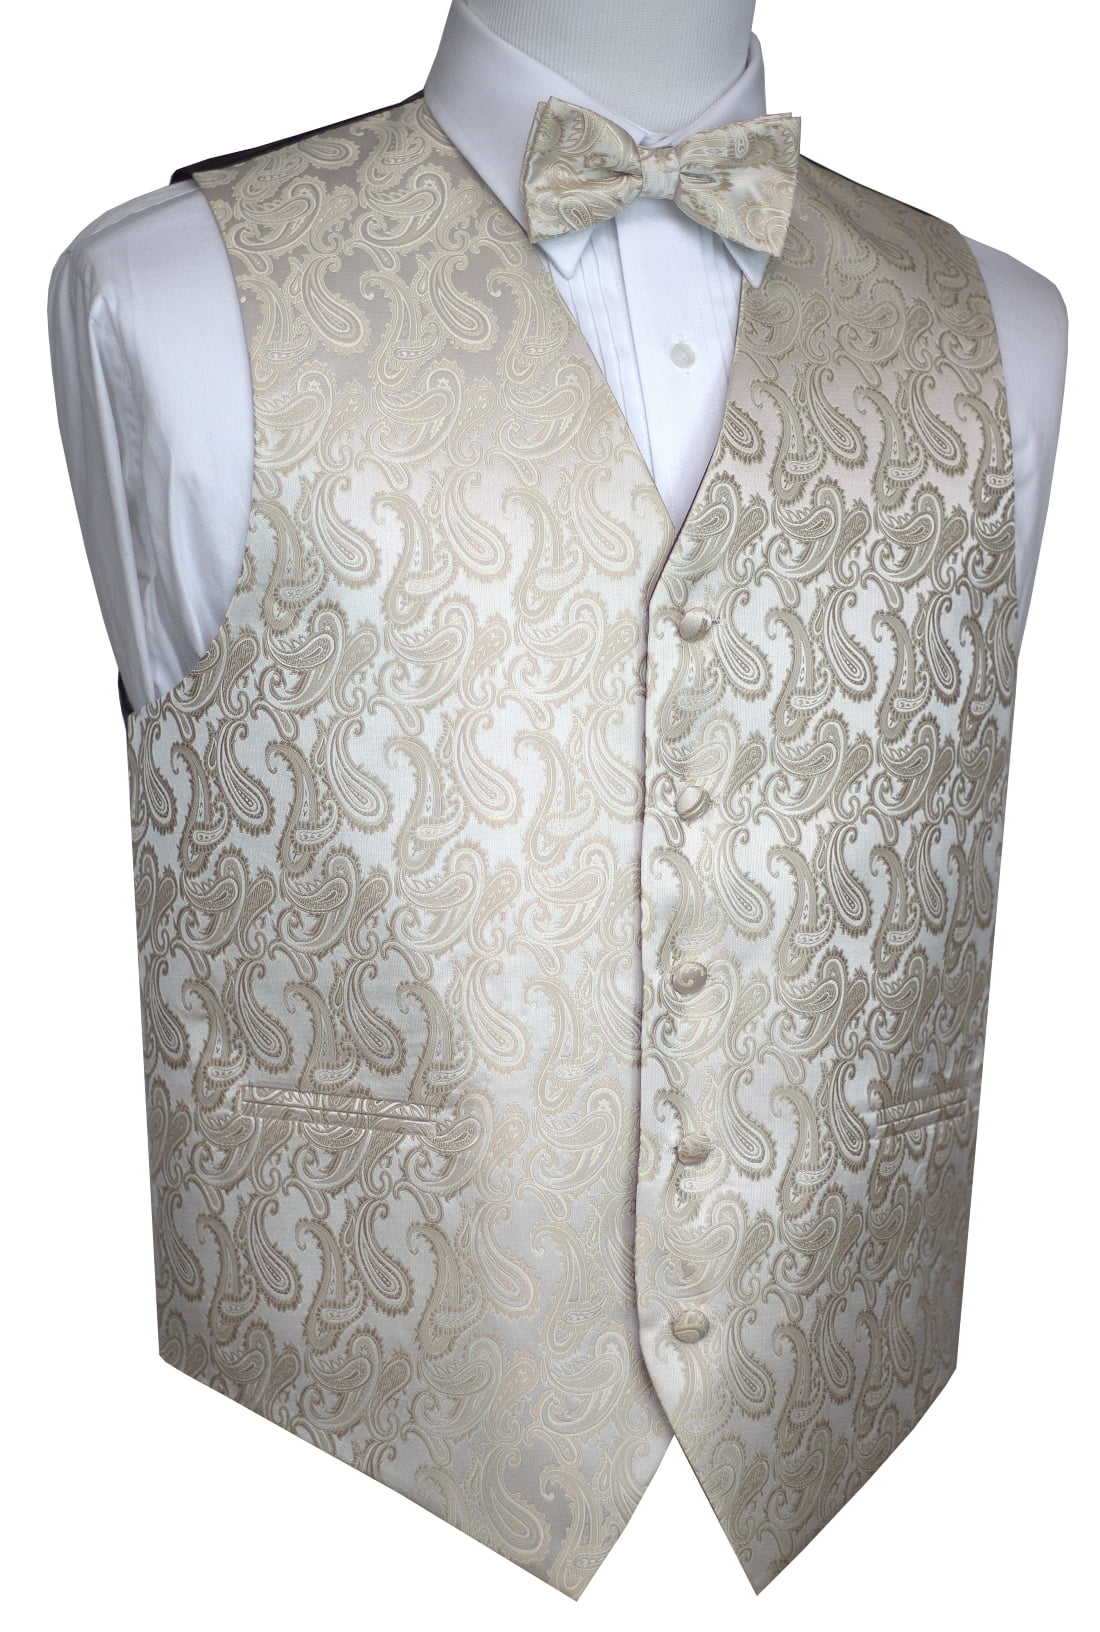 New Men's eggplant formal vest Tuxedo Waistcoat ascot hankie set wedding prom 